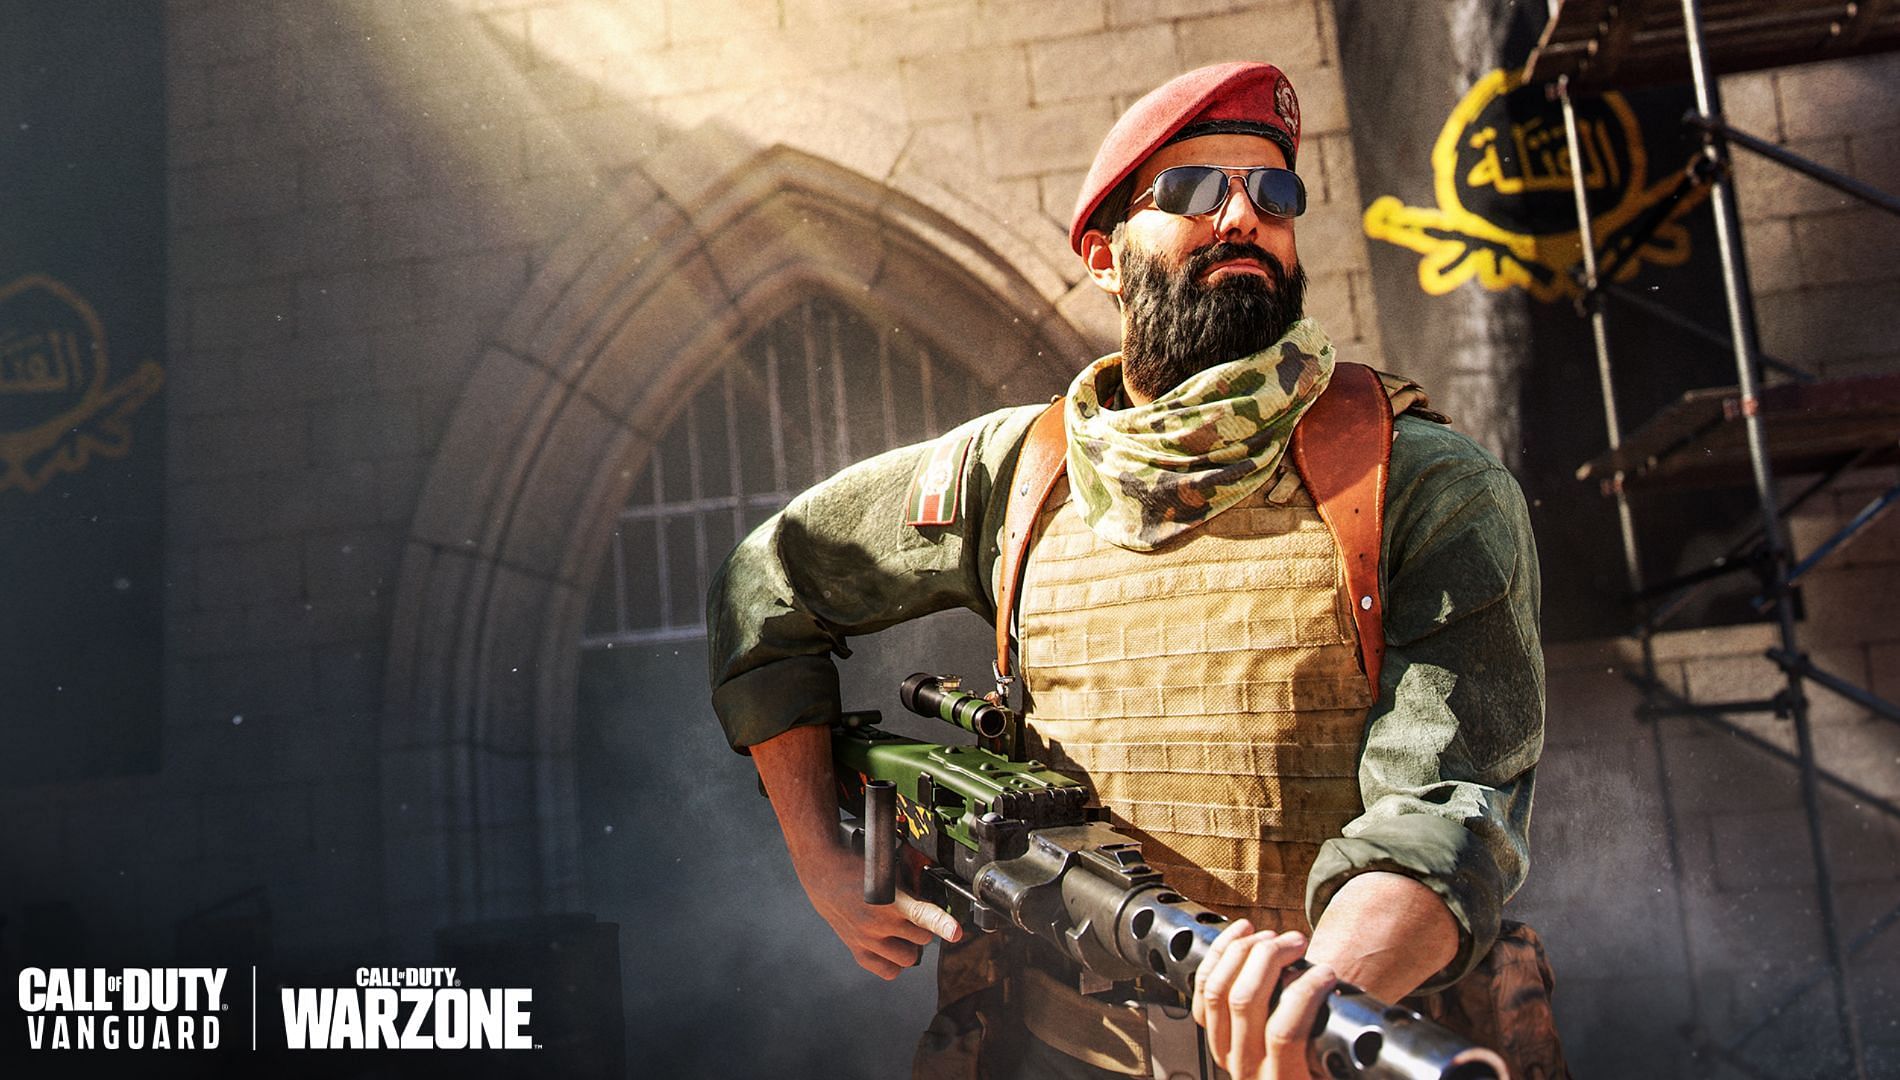 Khaled Al-Asad of Modern Warfare makes a comeback in Warzone (Image via Activision)